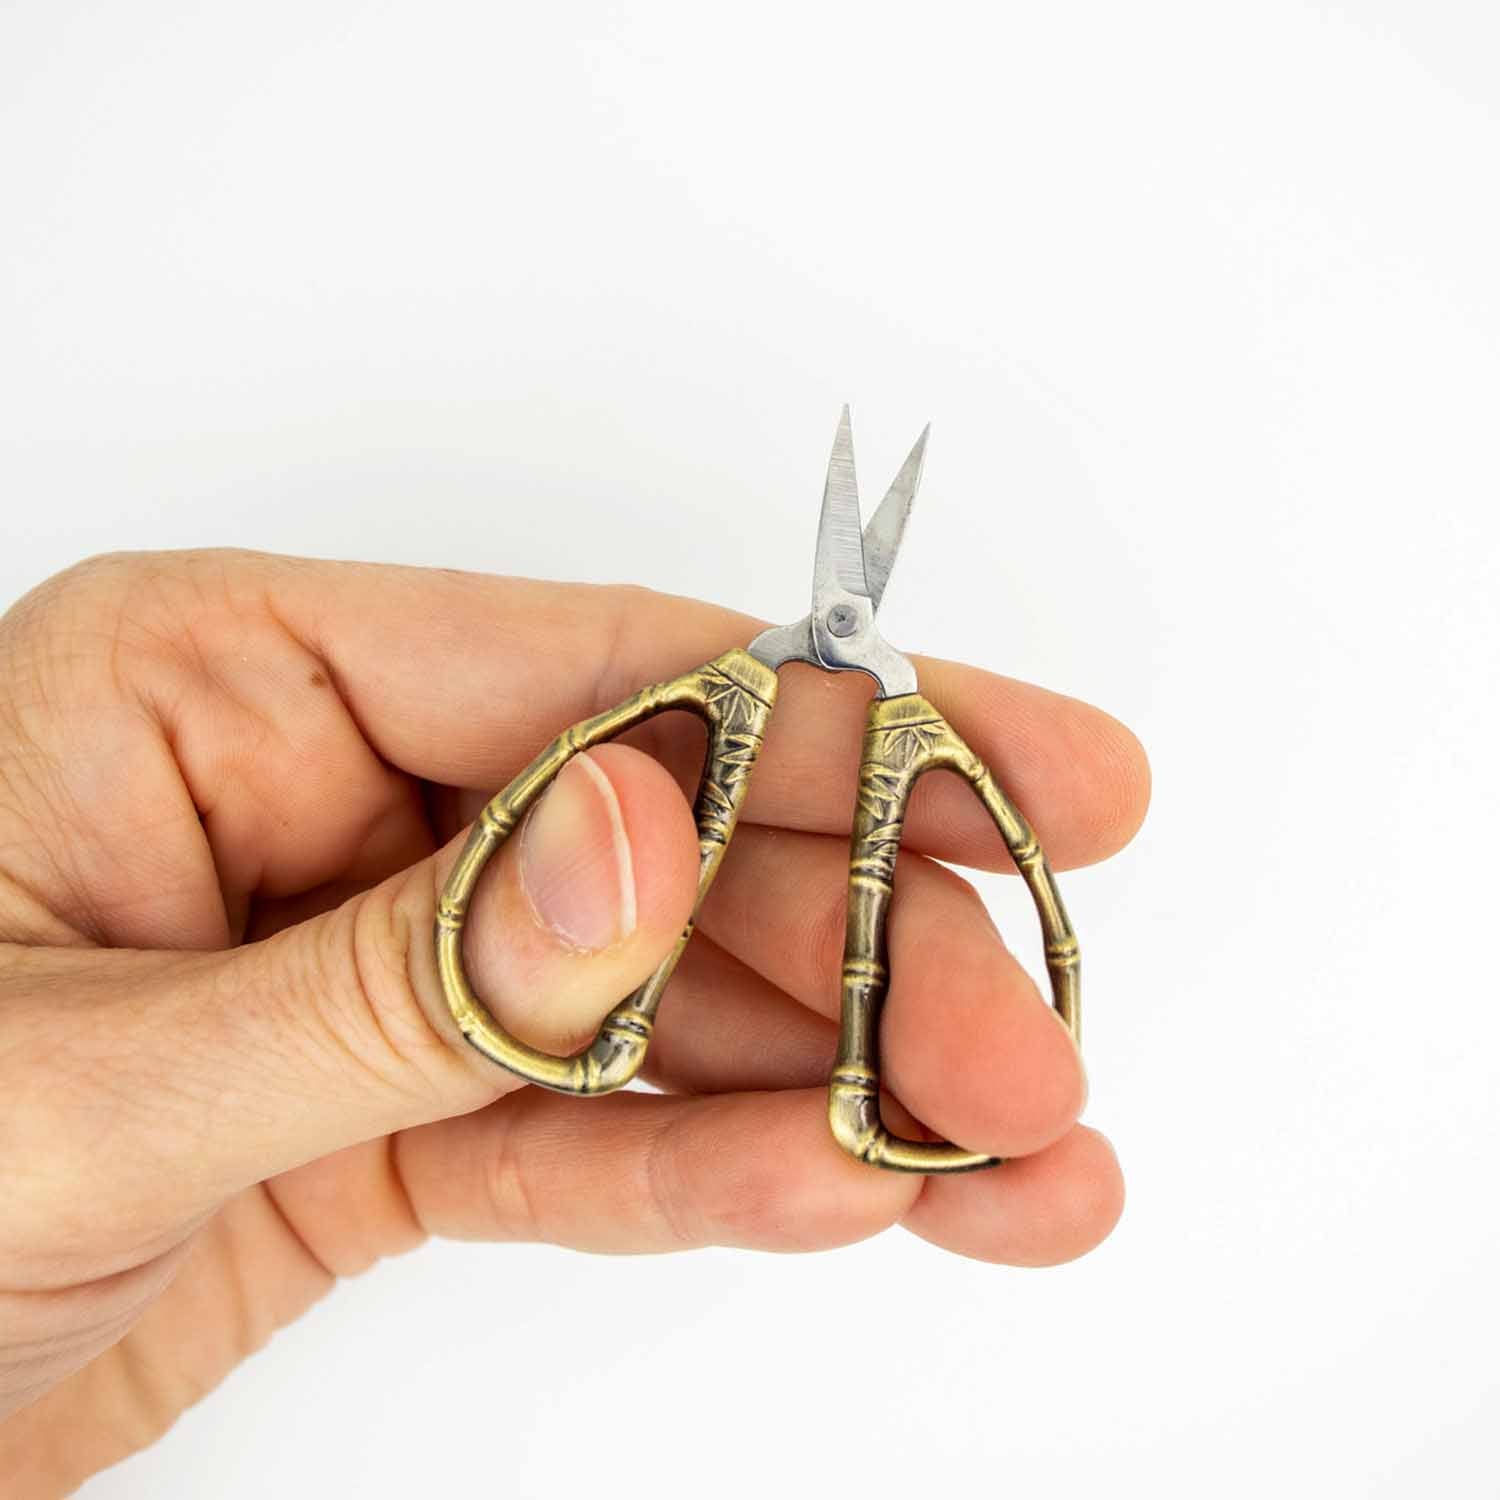 Economy Japanese Style Thread Nippers/Scissors